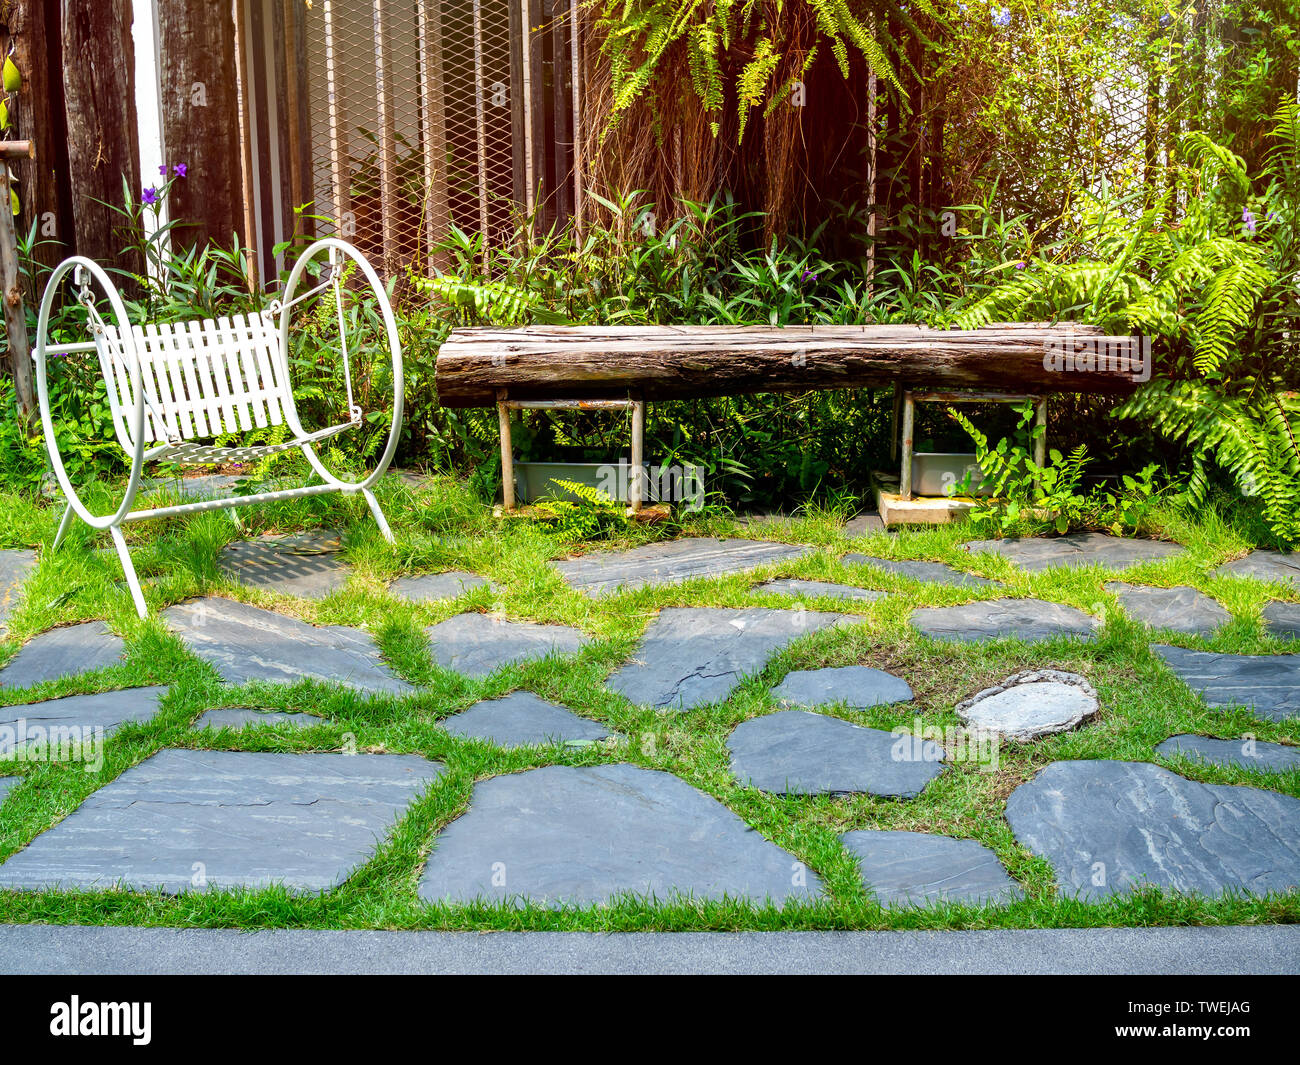 White Vintage Garden Swing Seat On Stone Floor In The Green Garden